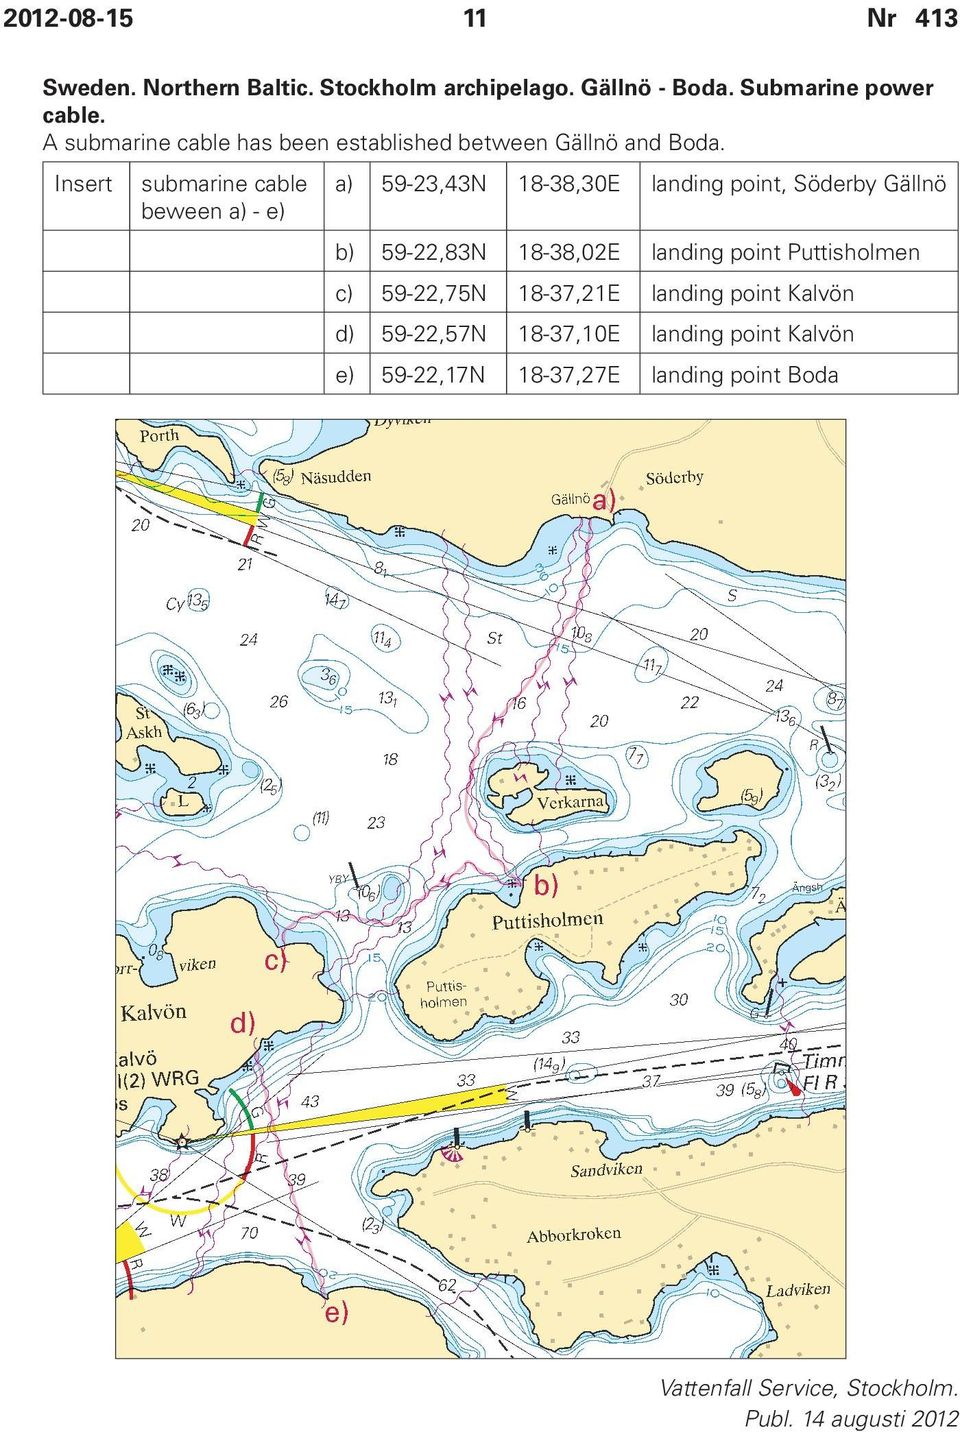 Insert submarine cable beween a) - e) a) 59-23,43N 18-38,30E landing point, Söderby Gällnö b) 59-22,83N 18-38,02E